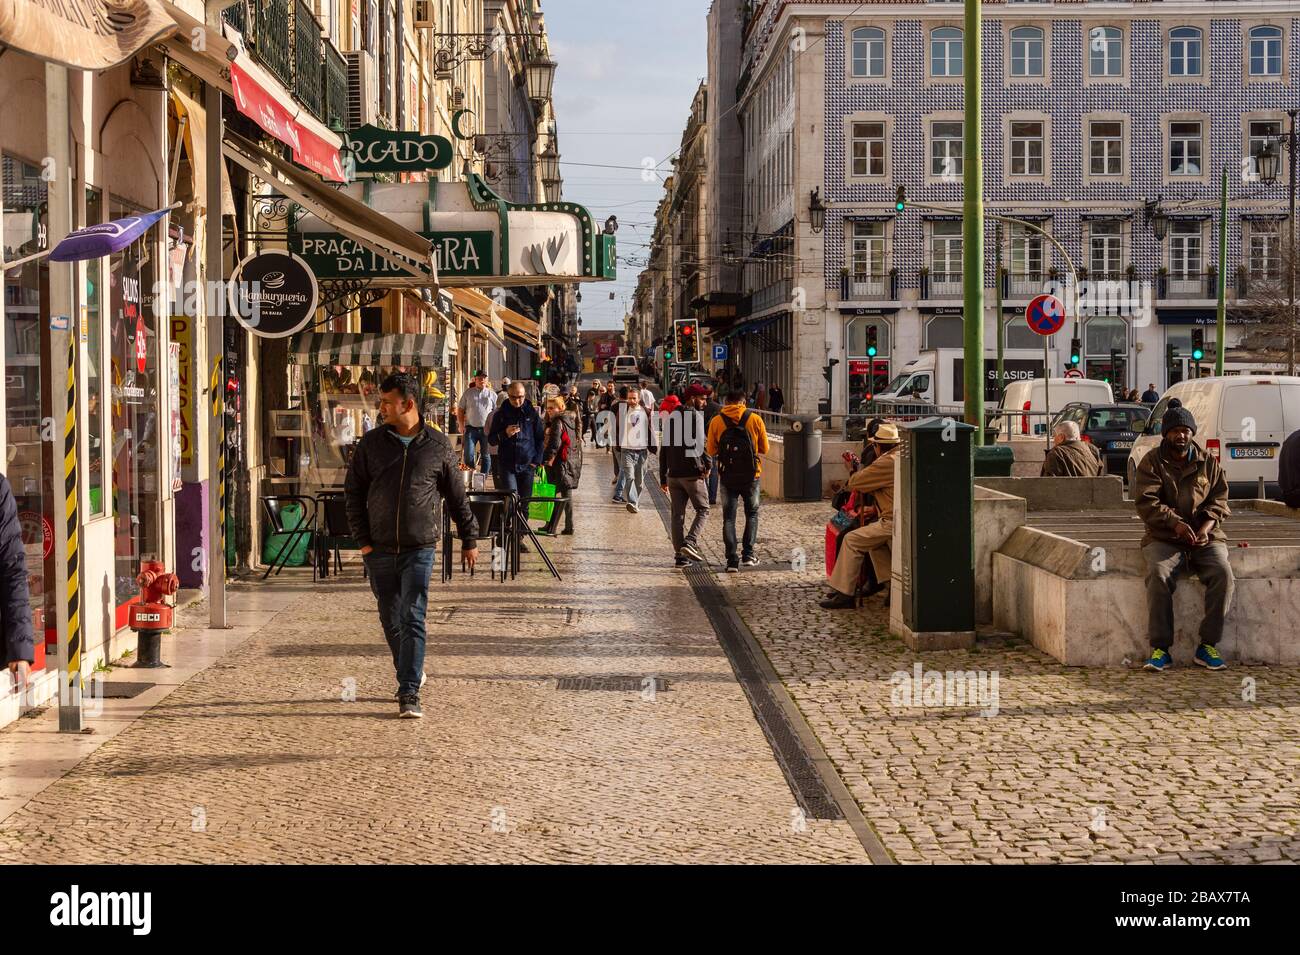 Lisbon, Portugal - 2 March 2020: Pedestrians walking at the Praca da Figueira Stock Photo